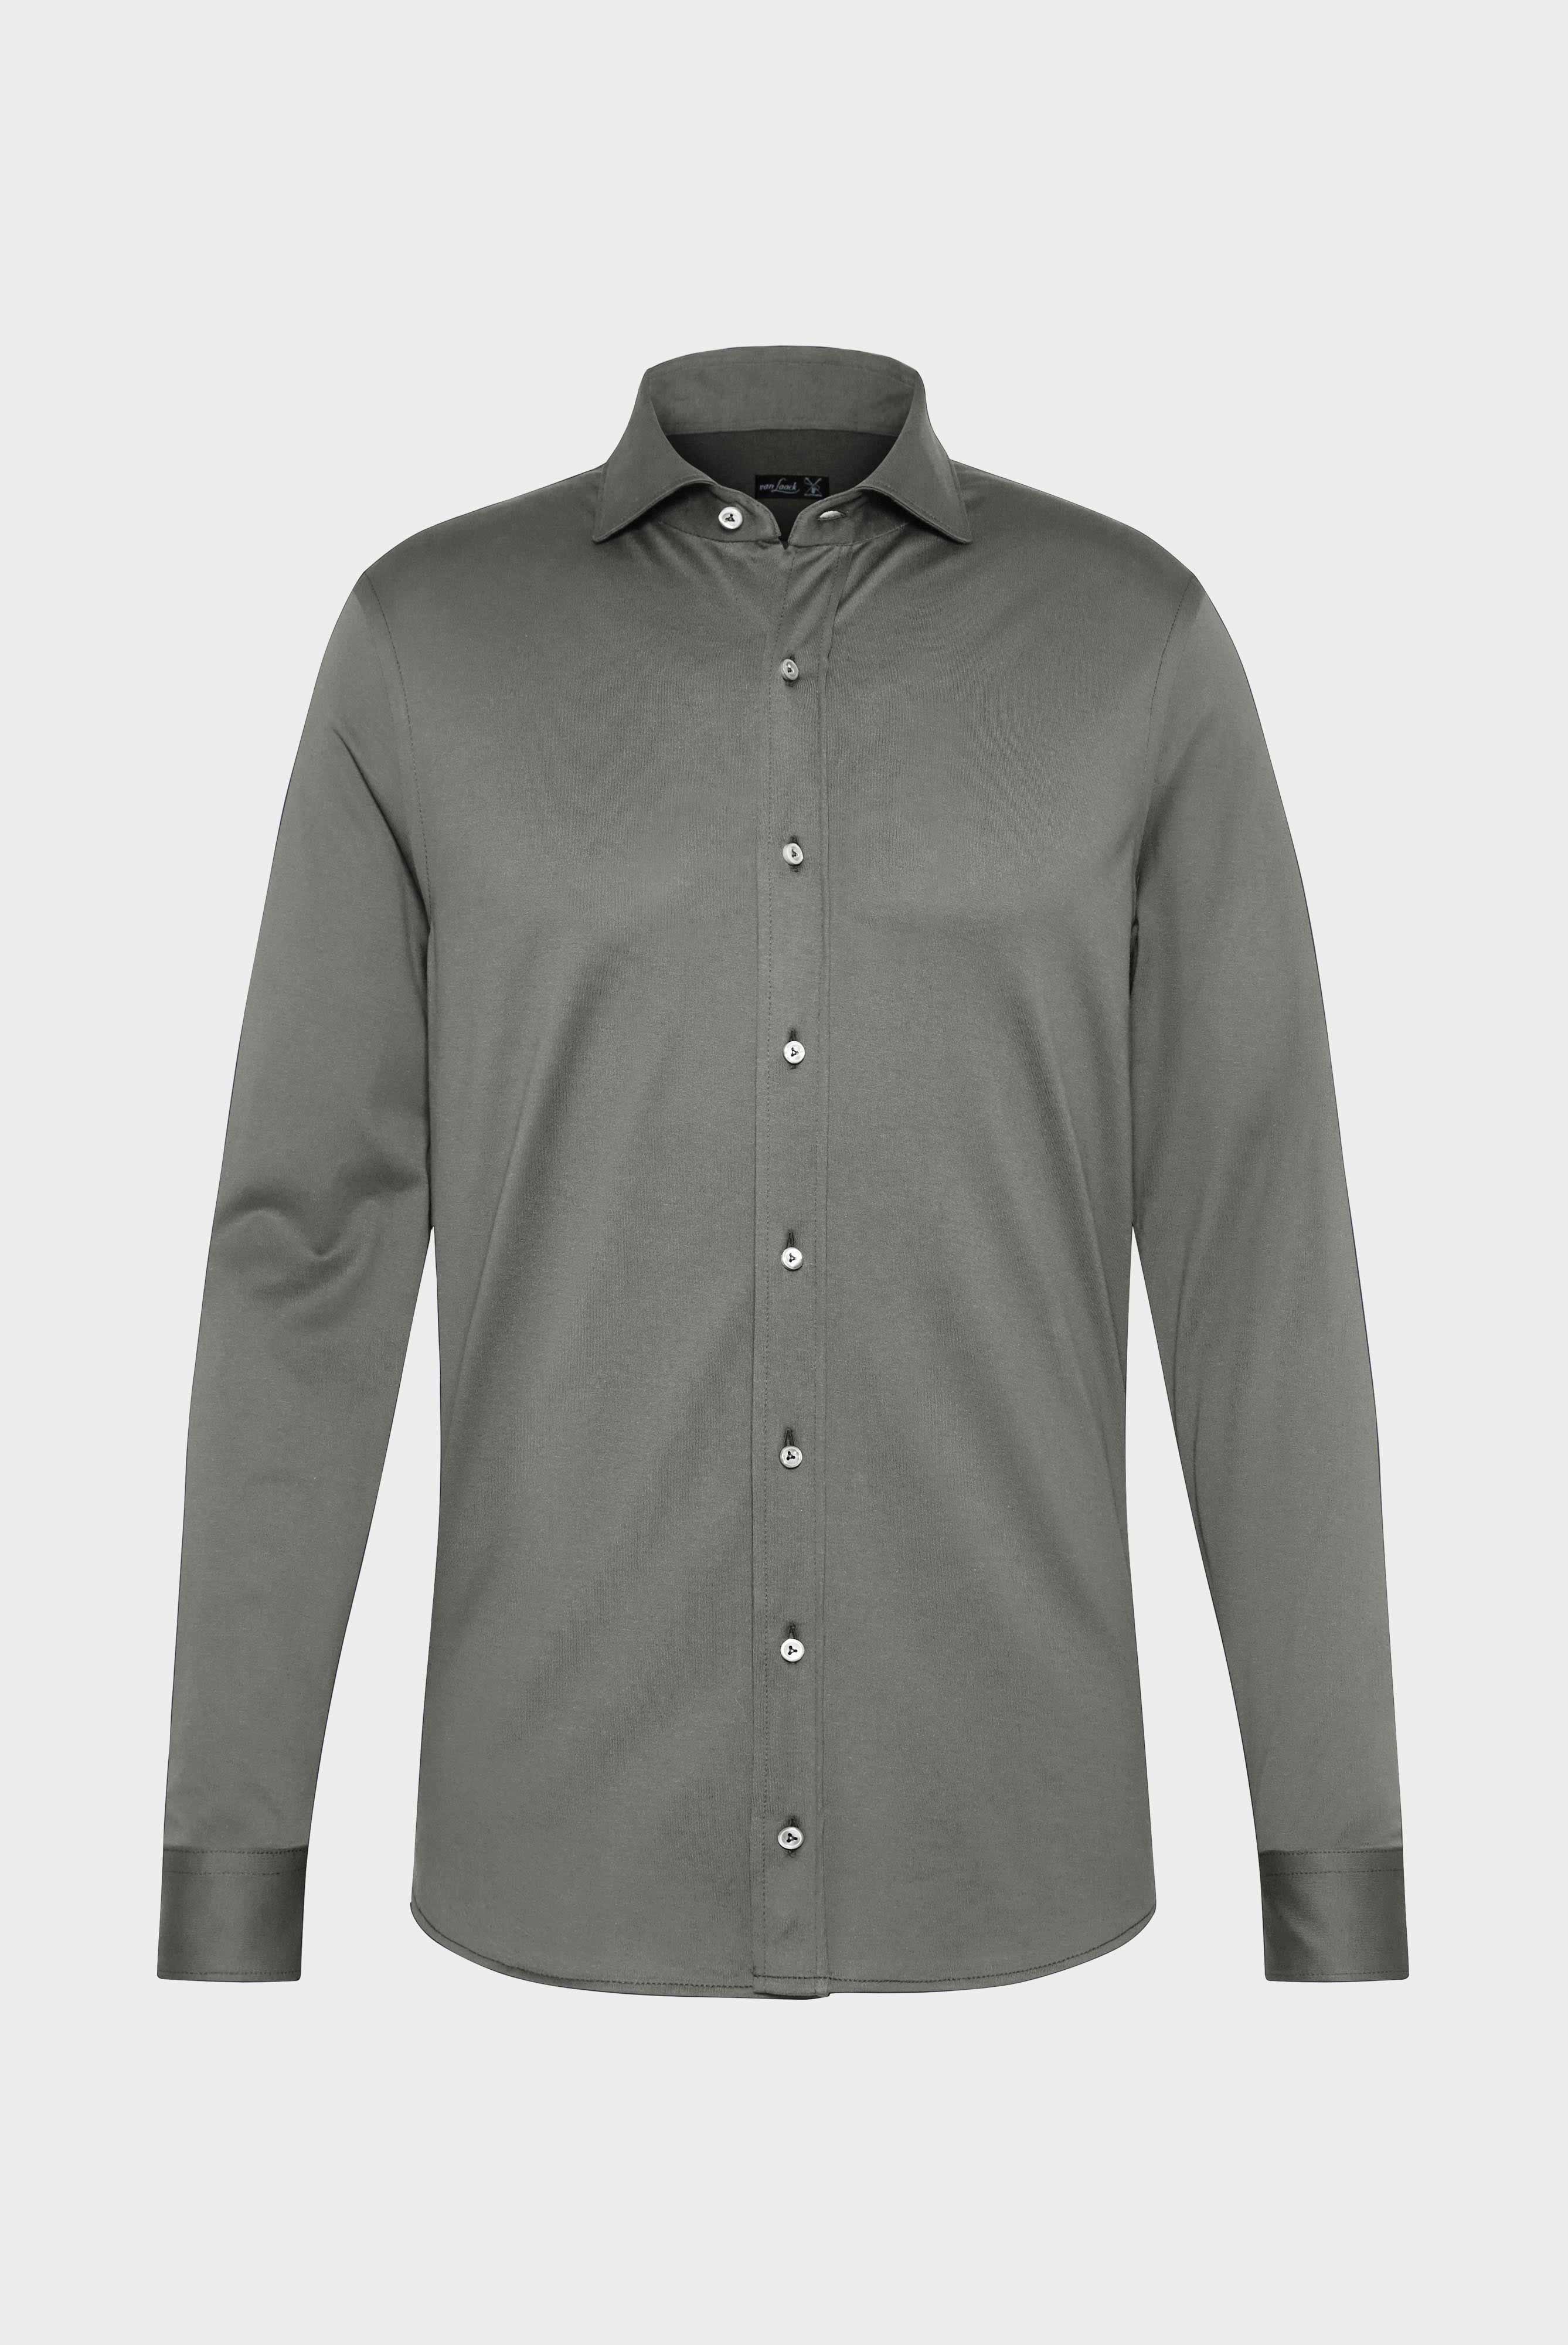 Jersey Shirts+Shirt in Long Staple Cotton+20.1651.UC.Z20044.960.S